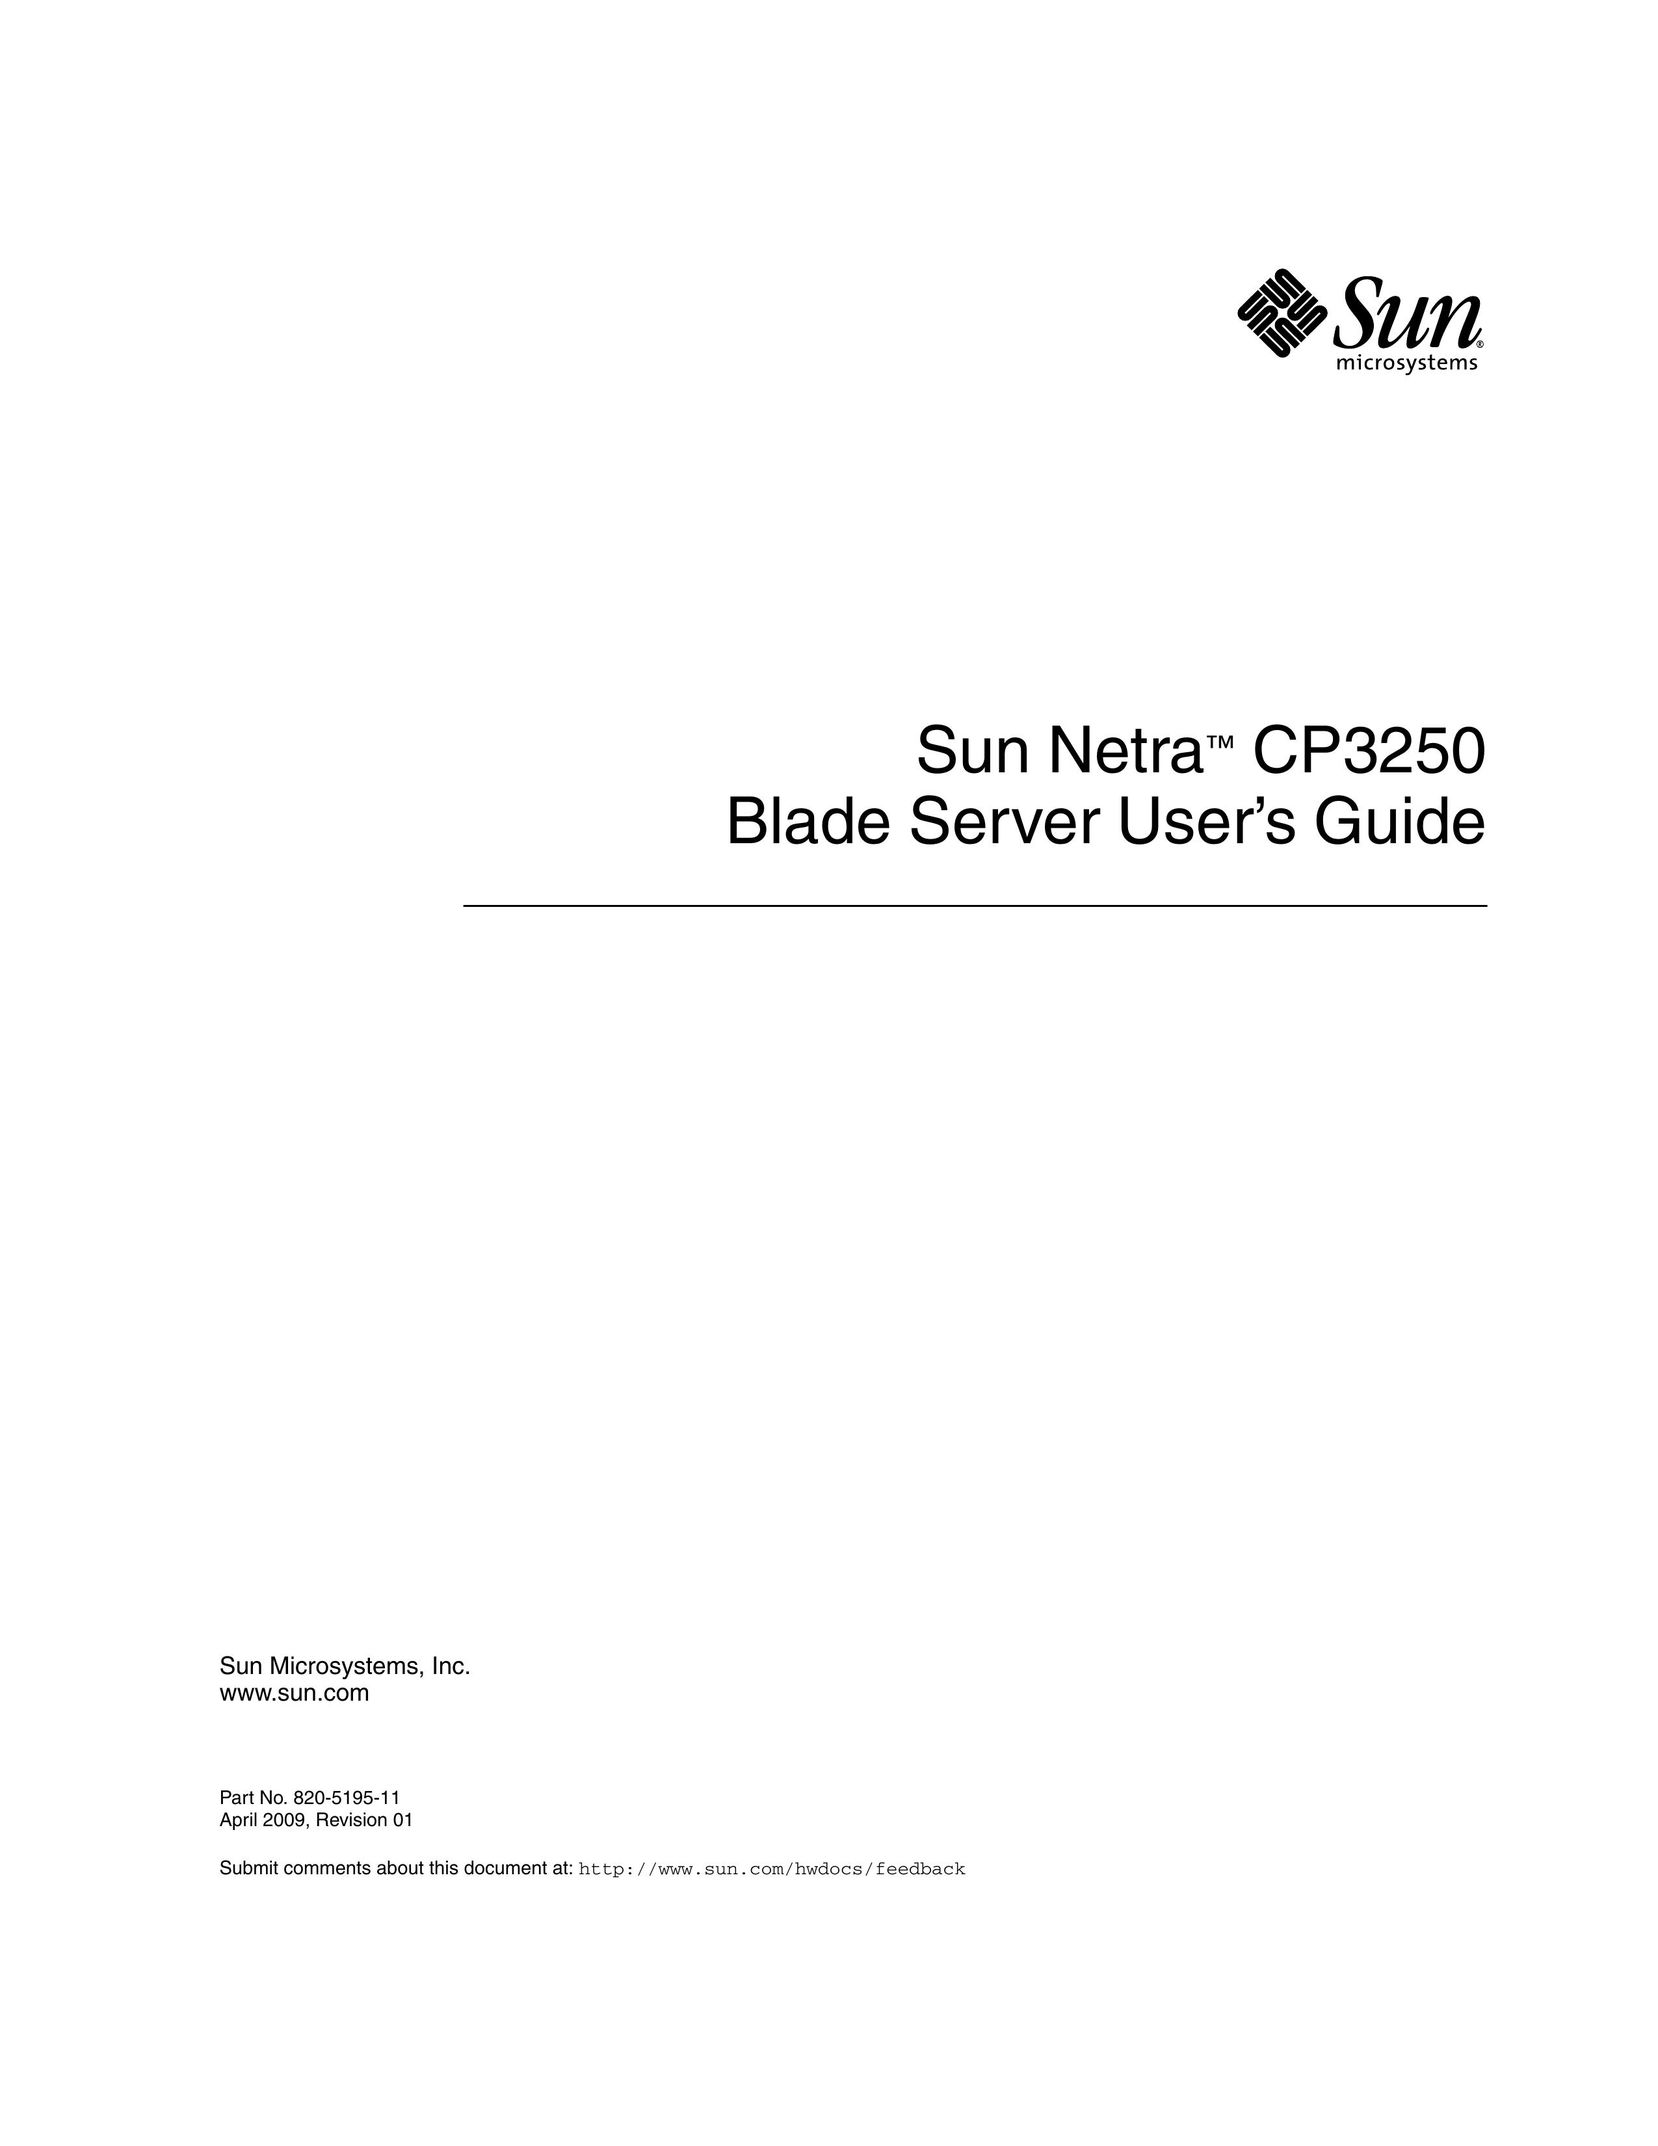 Sun Microsystems CP3250 Server User Manual